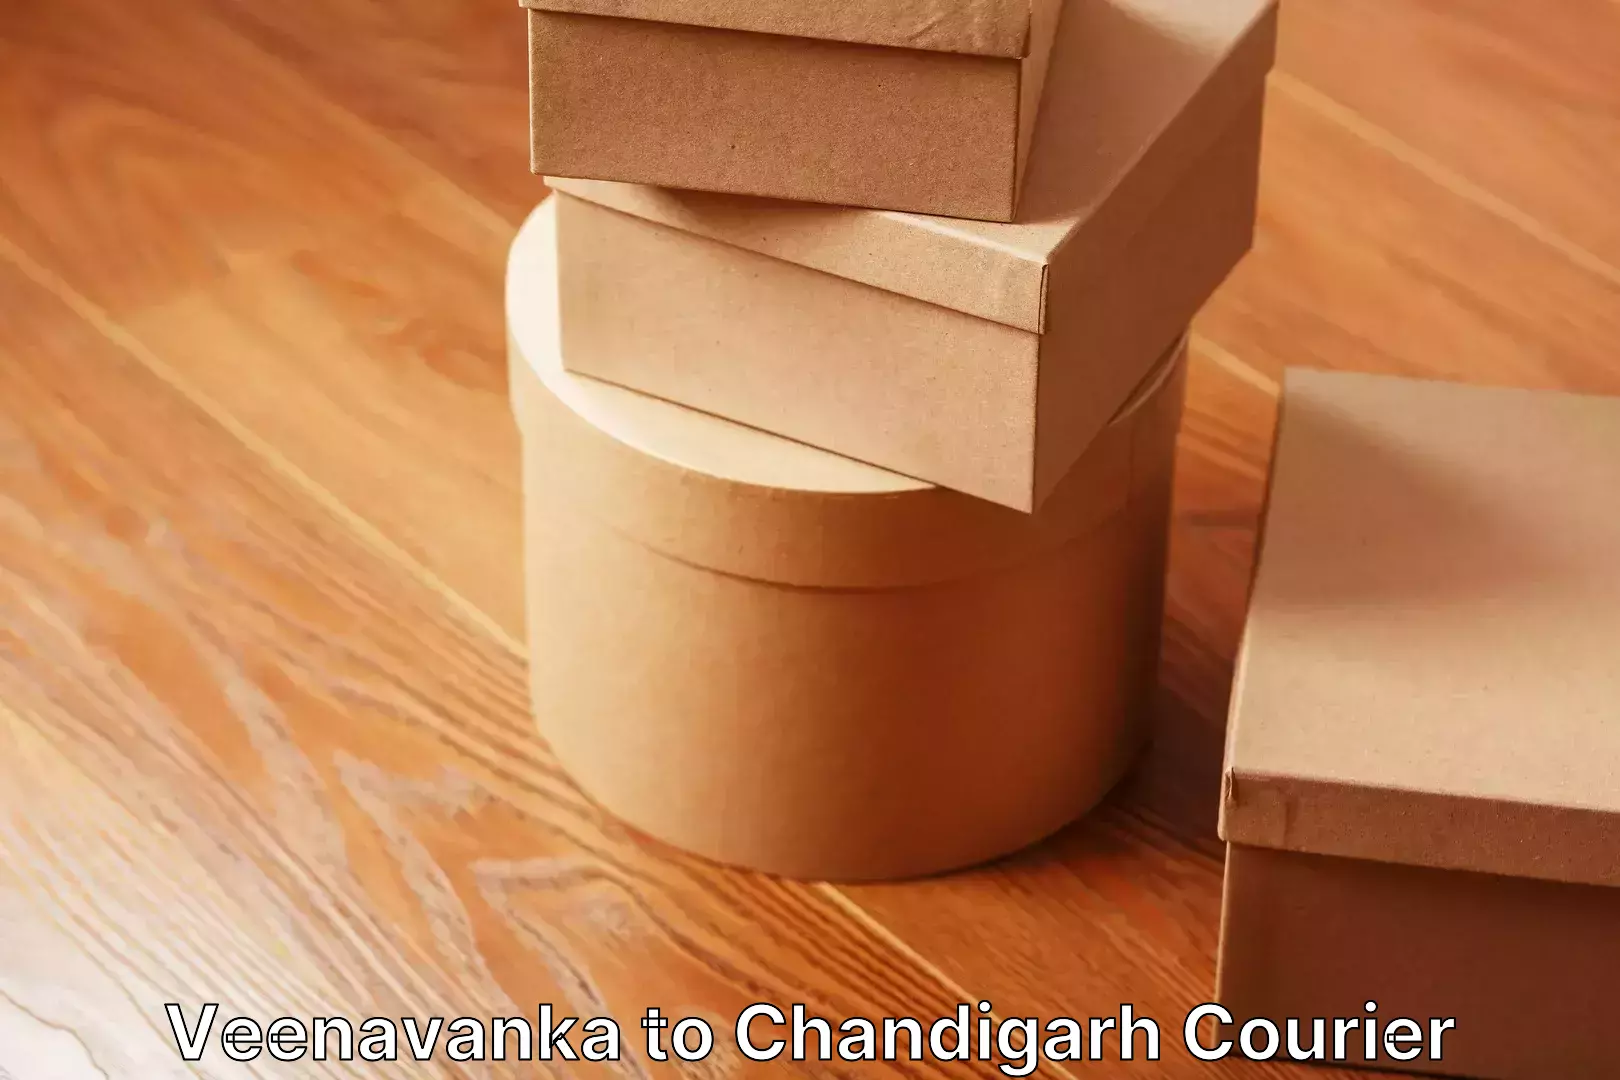 Professional moving company Veenavanka to Chandigarh